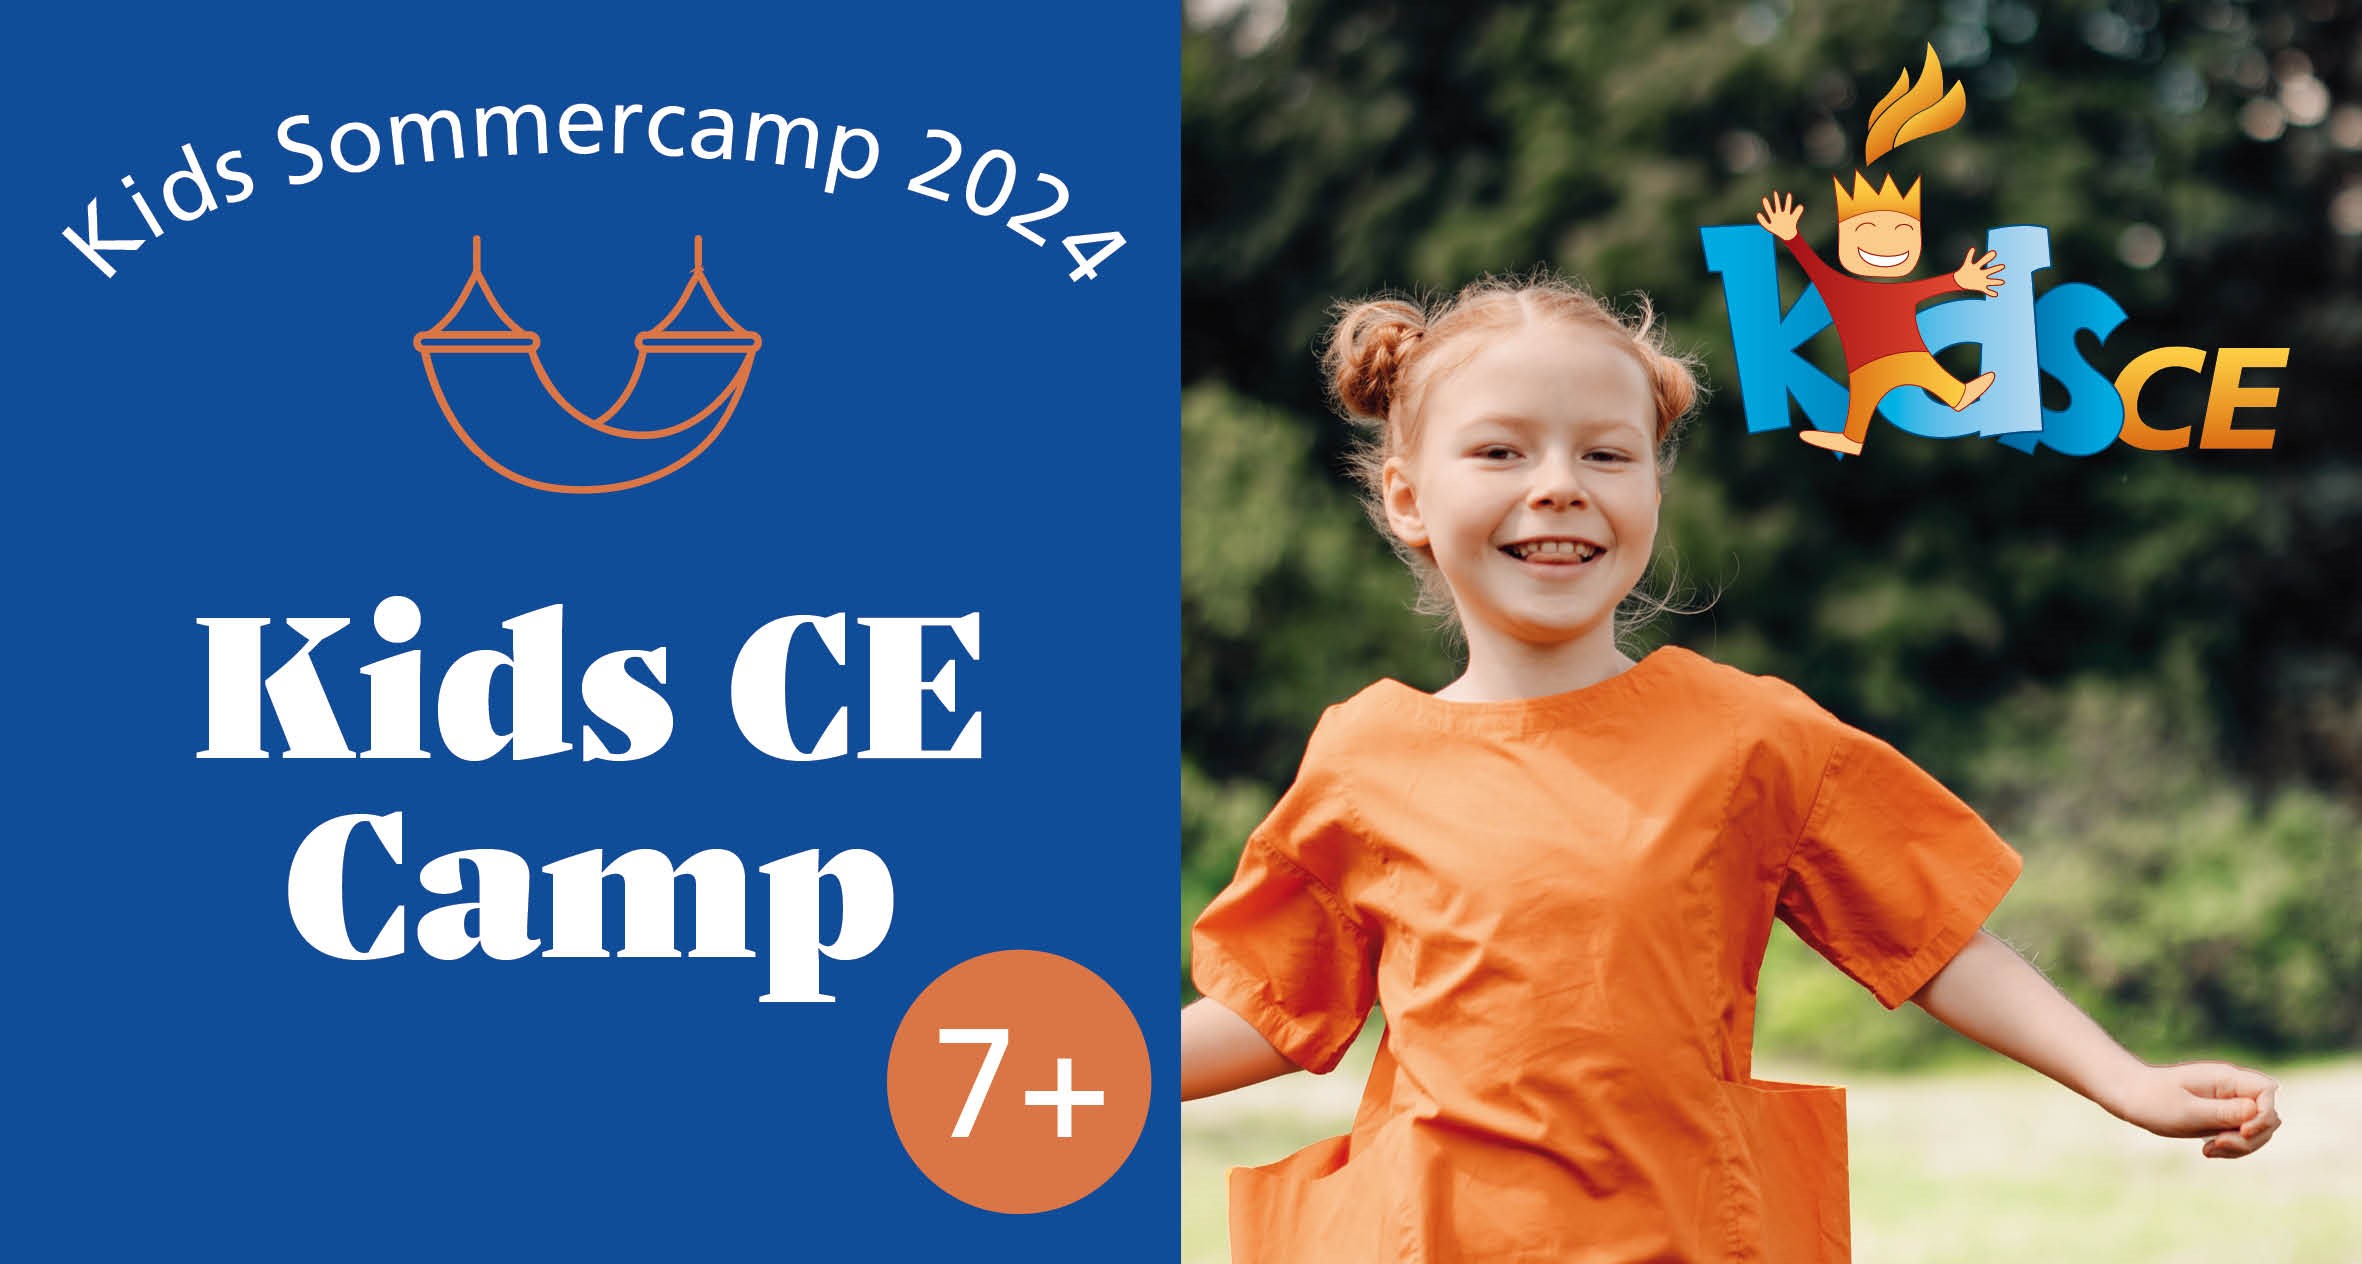 KidsCE Camp 2024